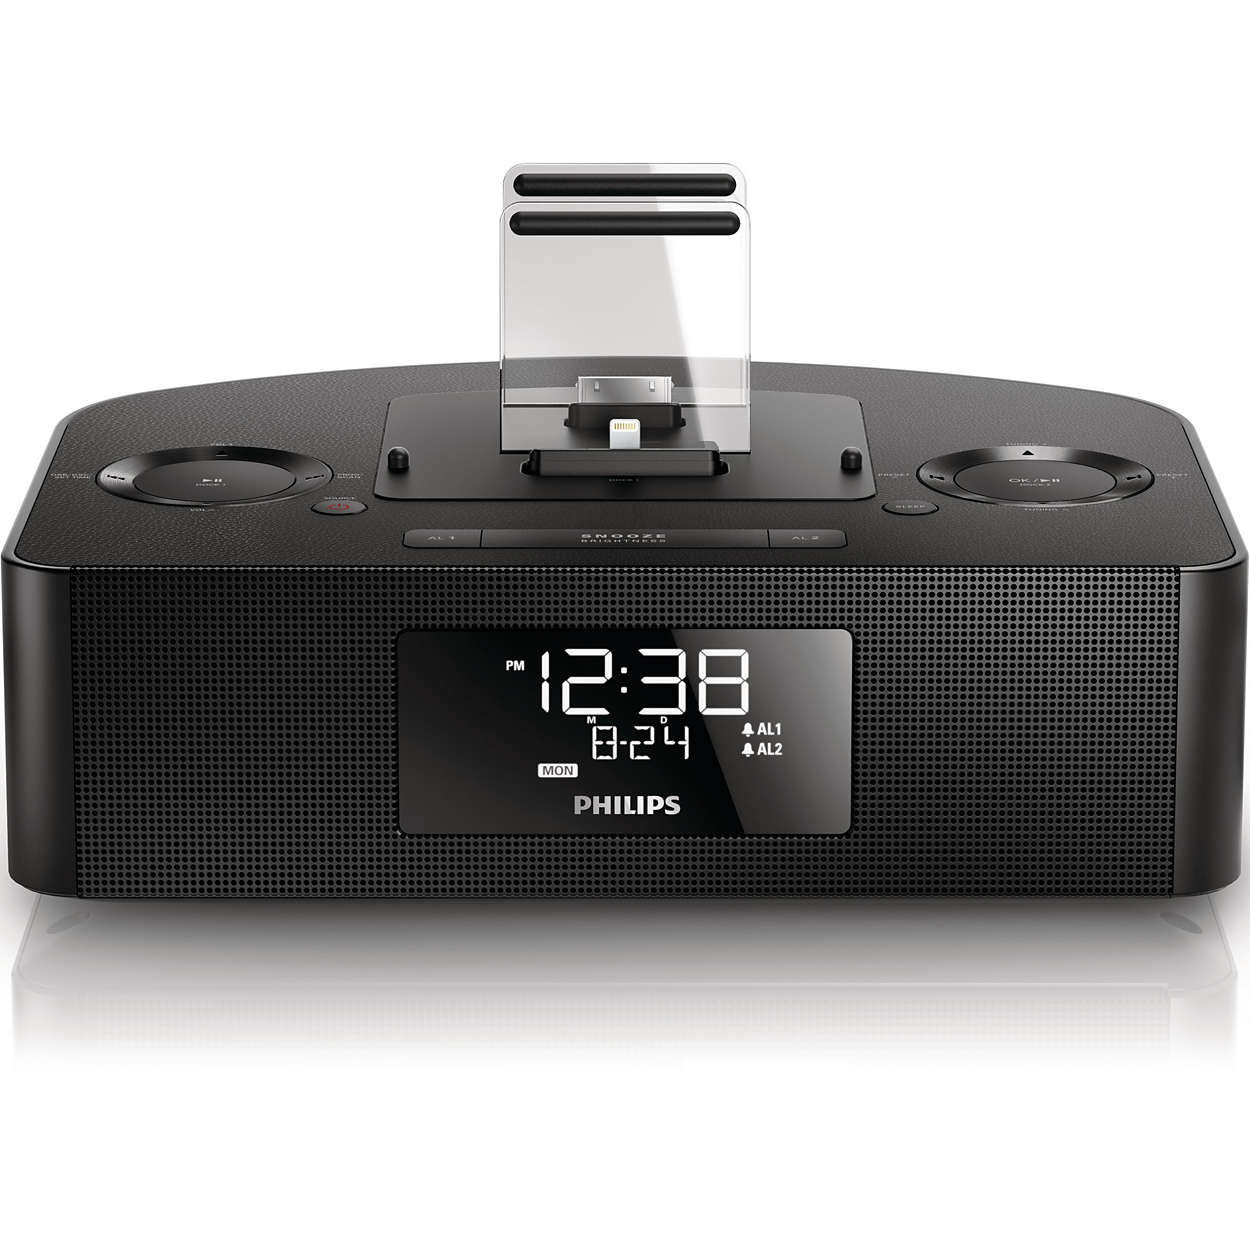 Philips radio despertador TAPR 702 Sleep timer Bluetooth inalámbrico carga nuevo 